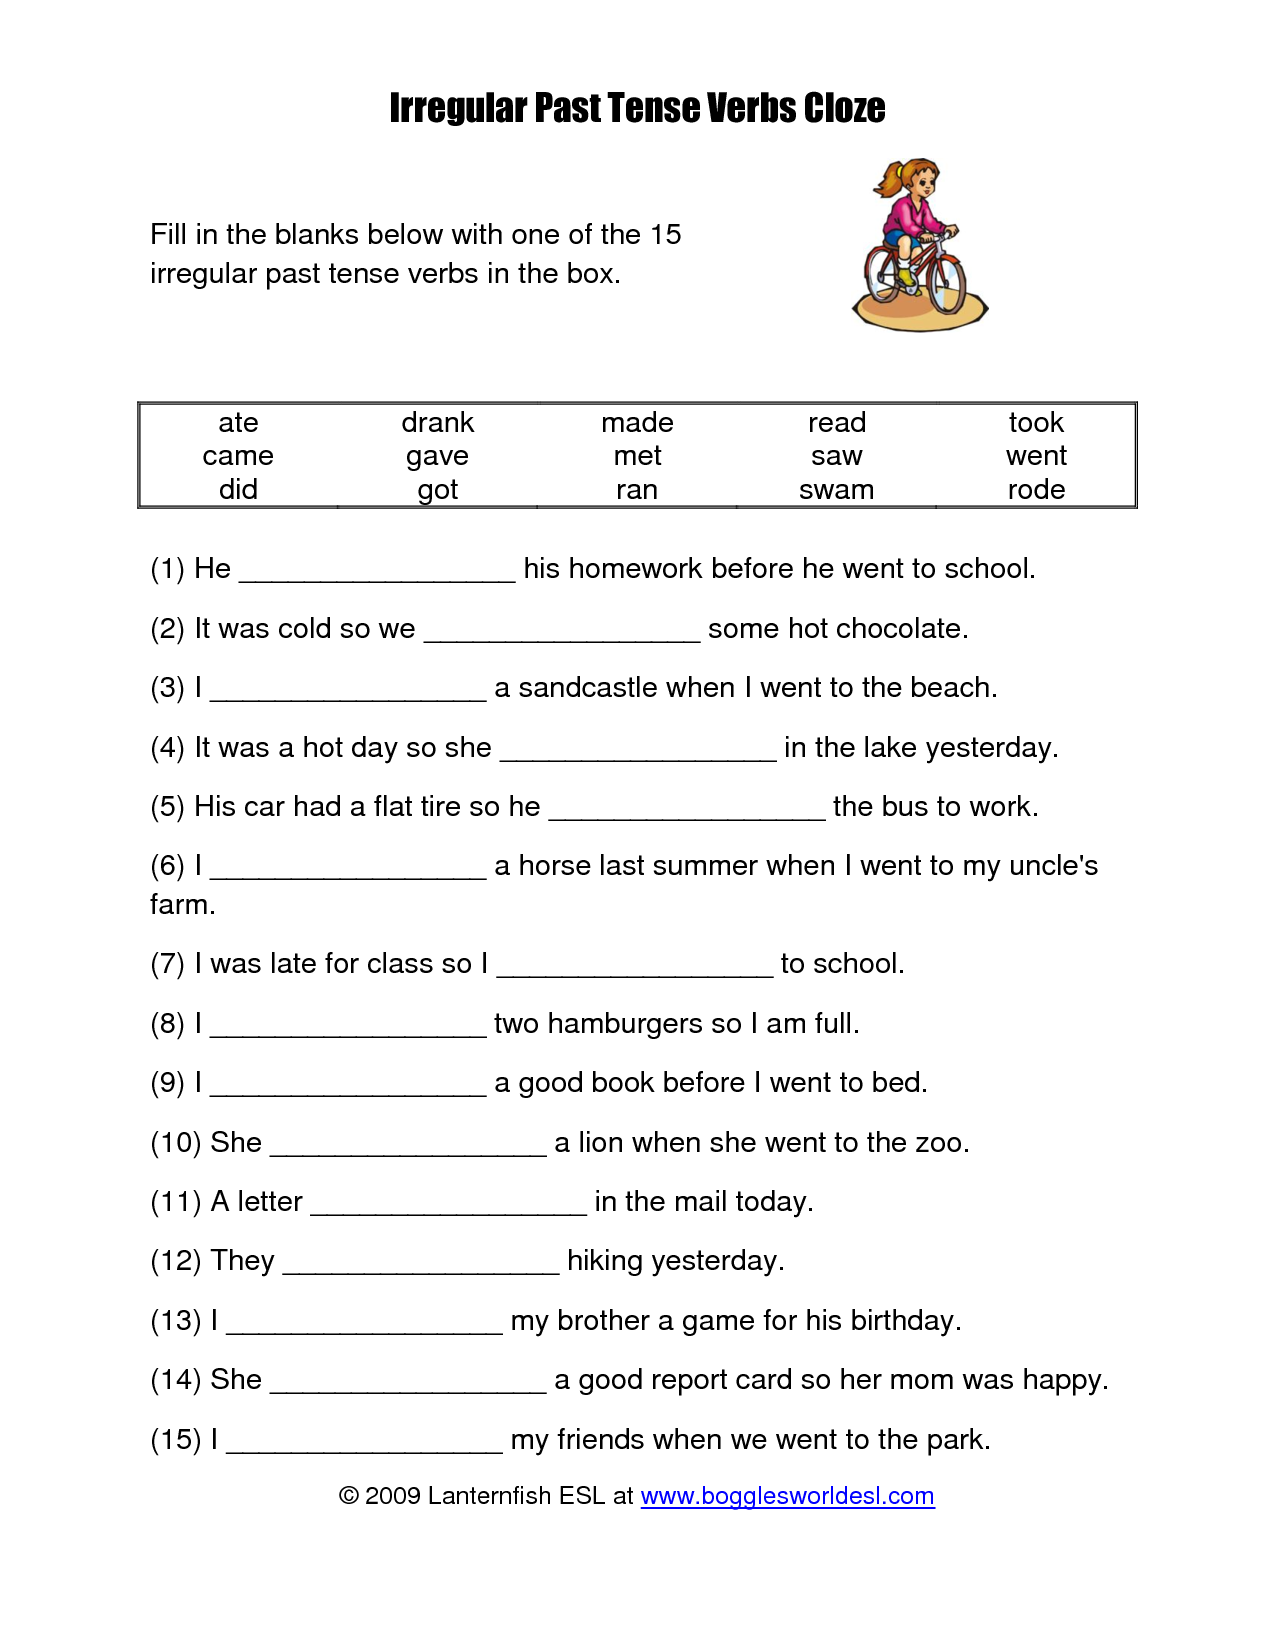 verbs-worksheets-for-grade-1-2